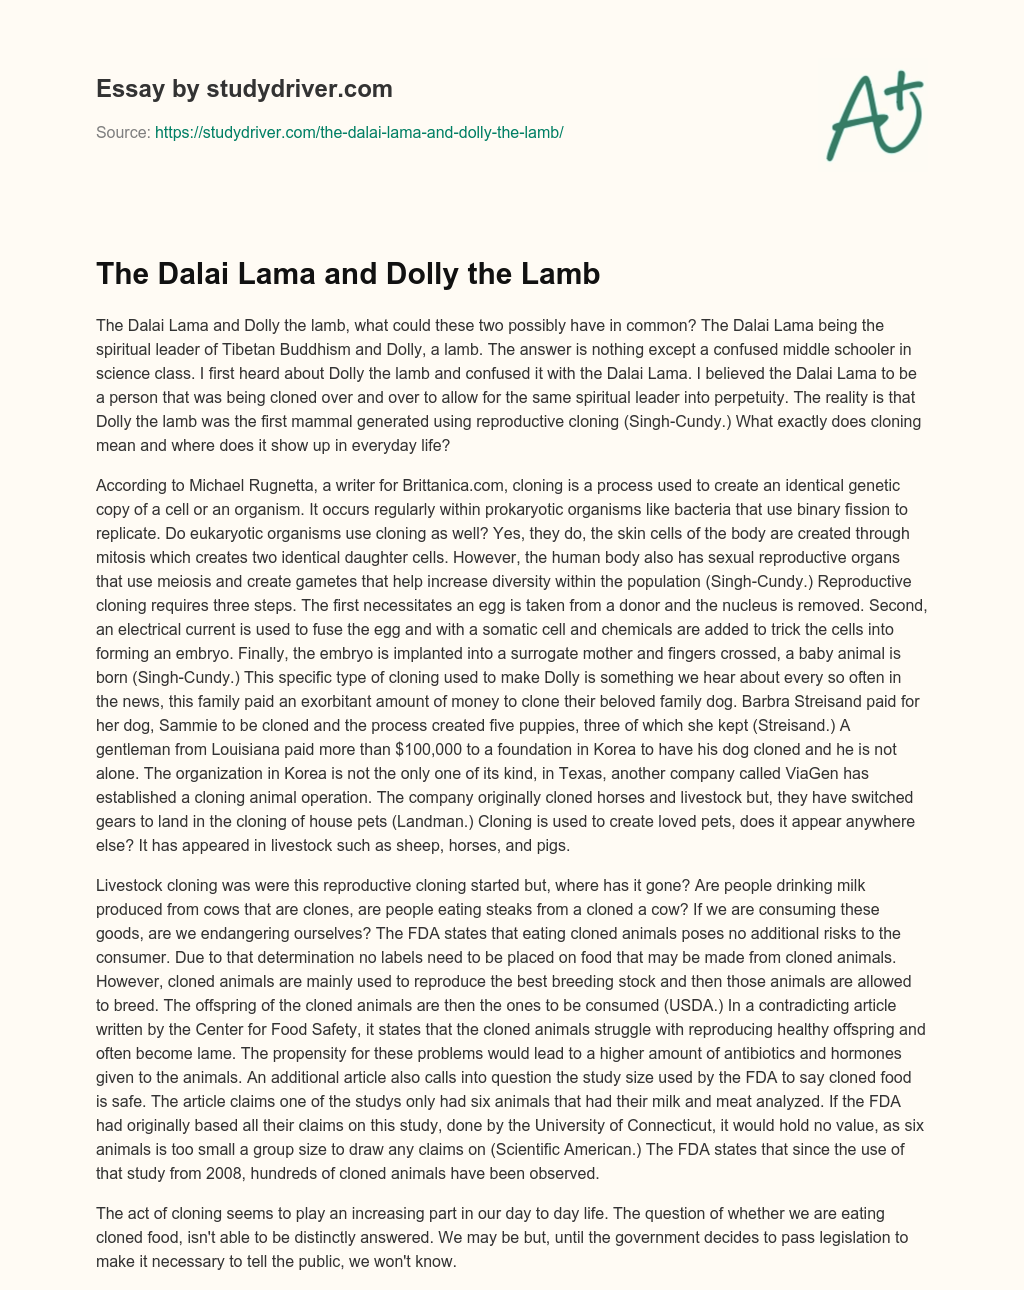 The Dalai Lama and Dolly the Lamb essay